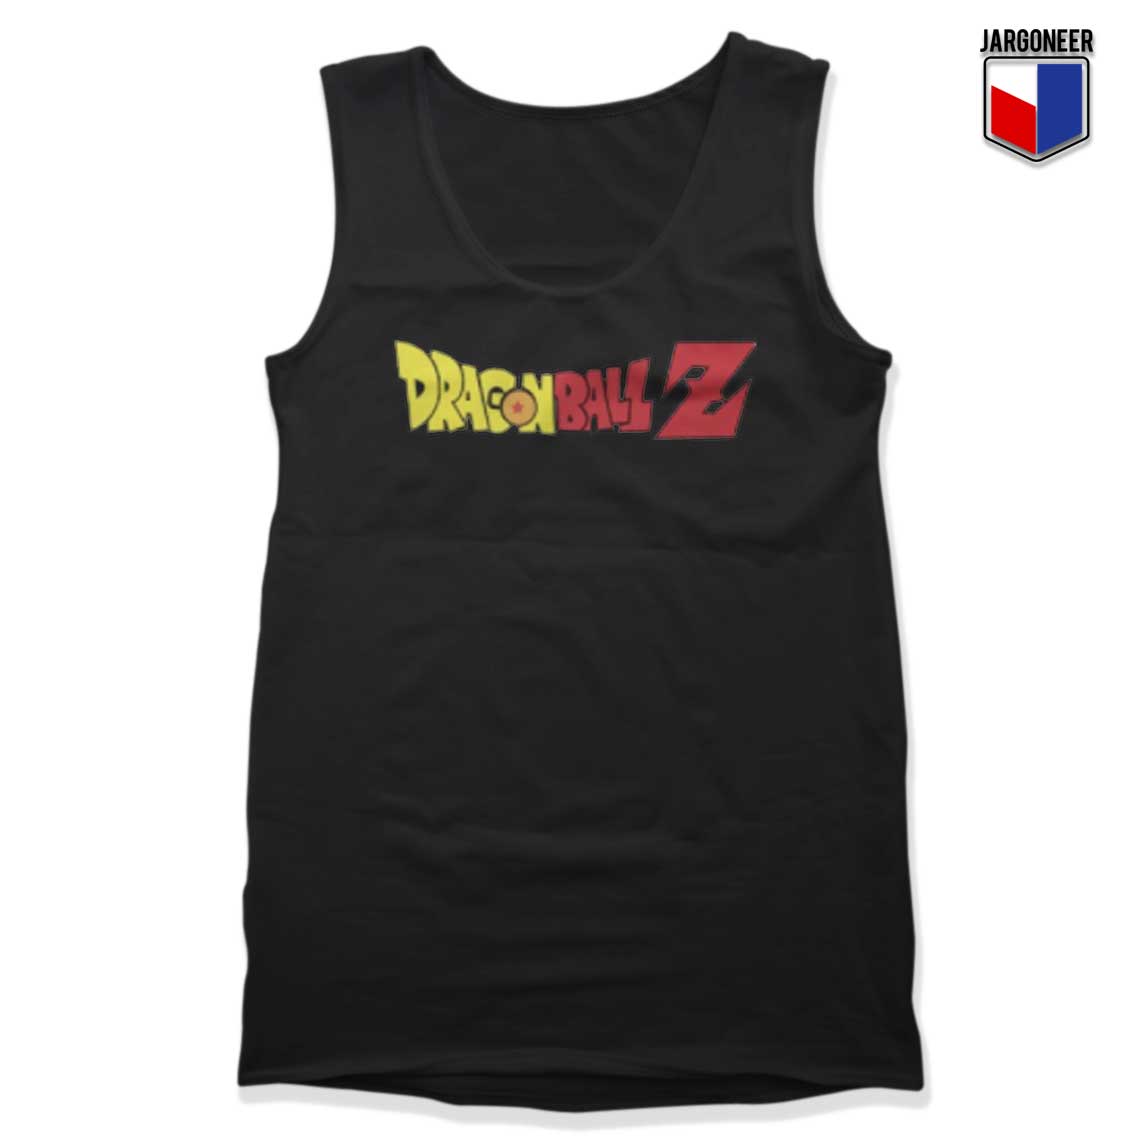 DragonBall Z Logo Tank Top - Shop Unique Graphic Cool Shirt Designs